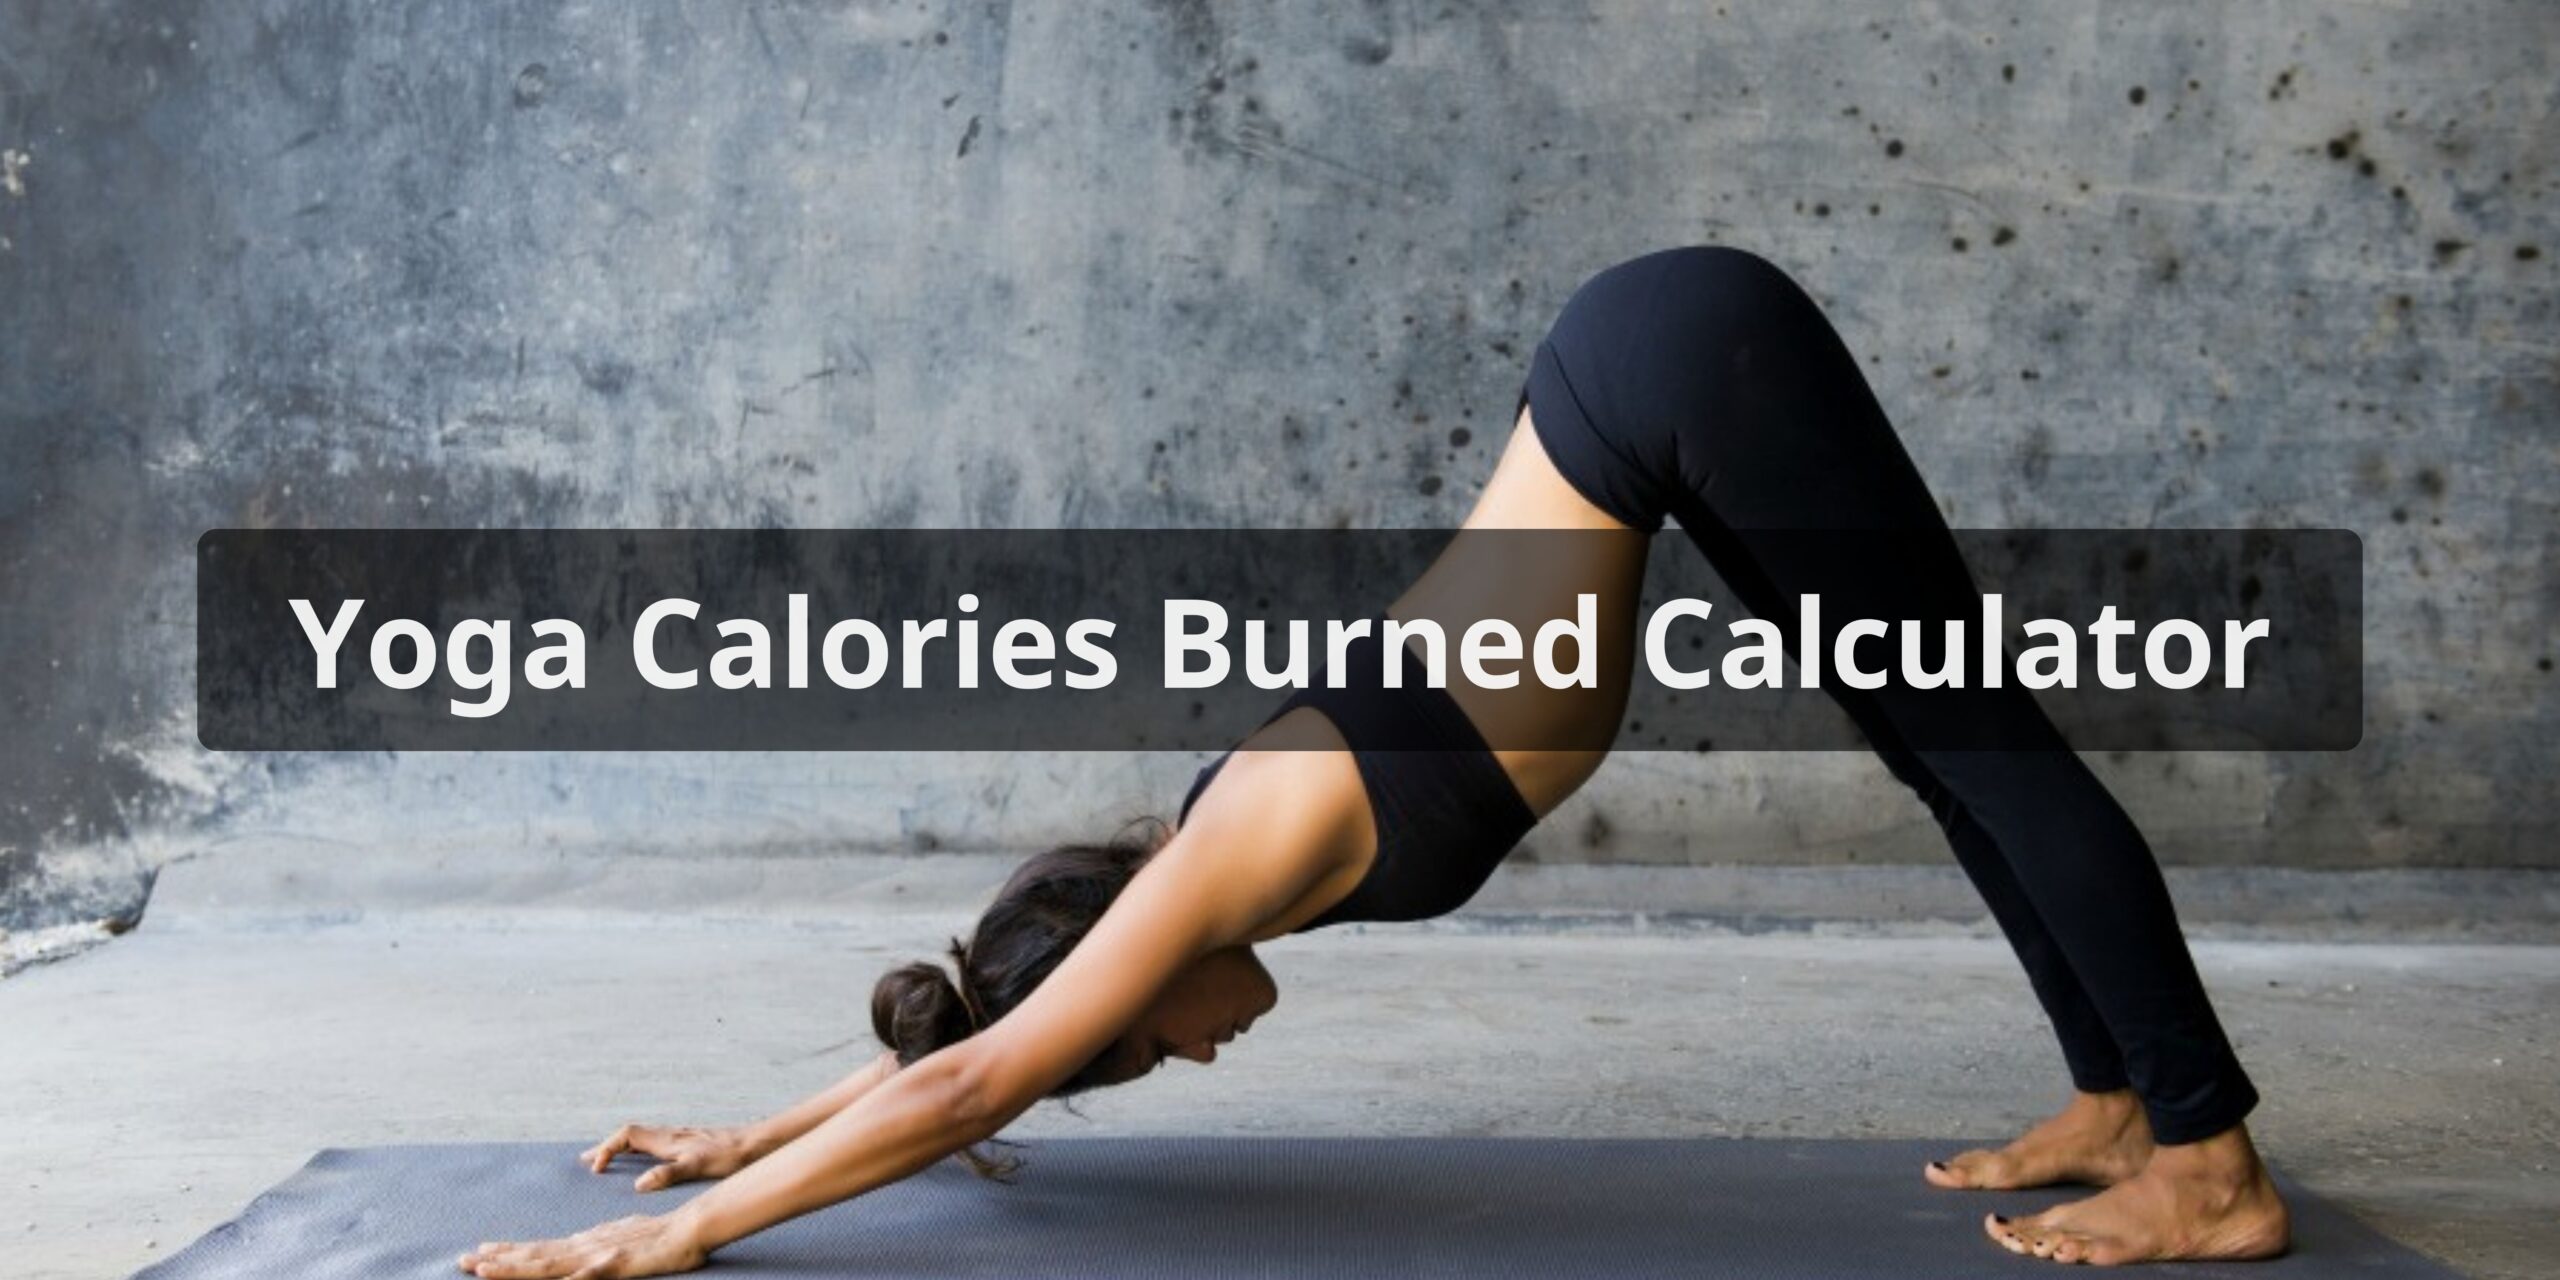 Yoga Calories Burned Calculator